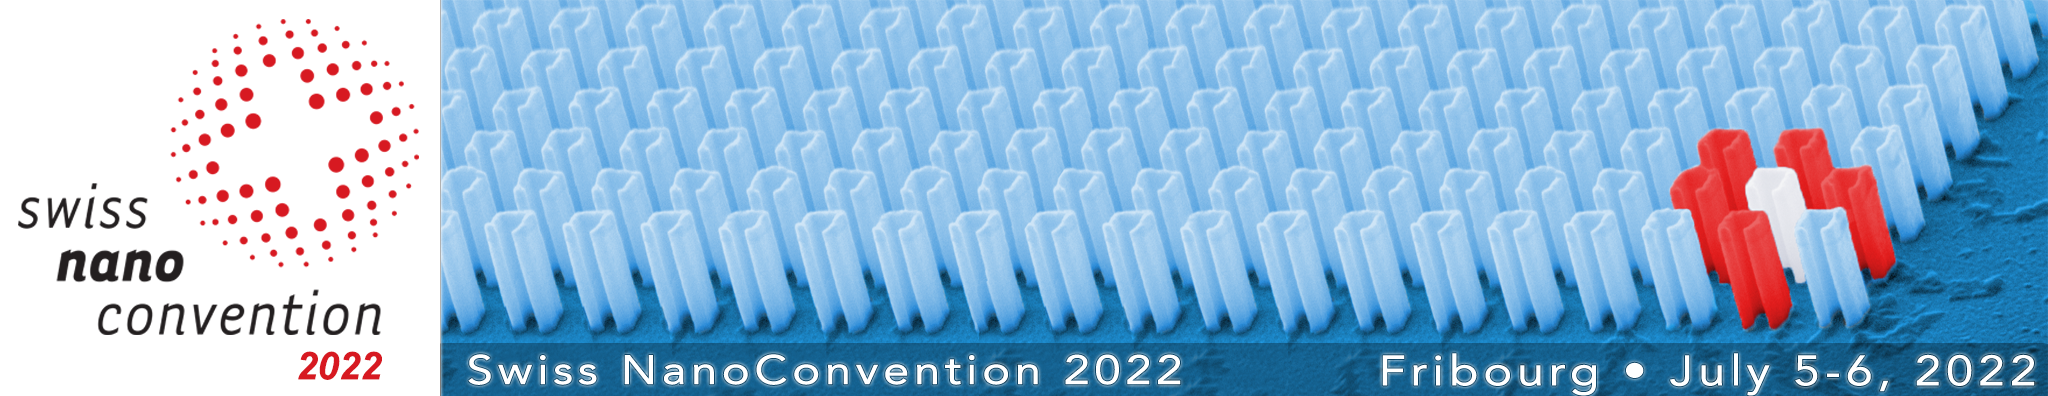 Swiss NanoConvention 2022